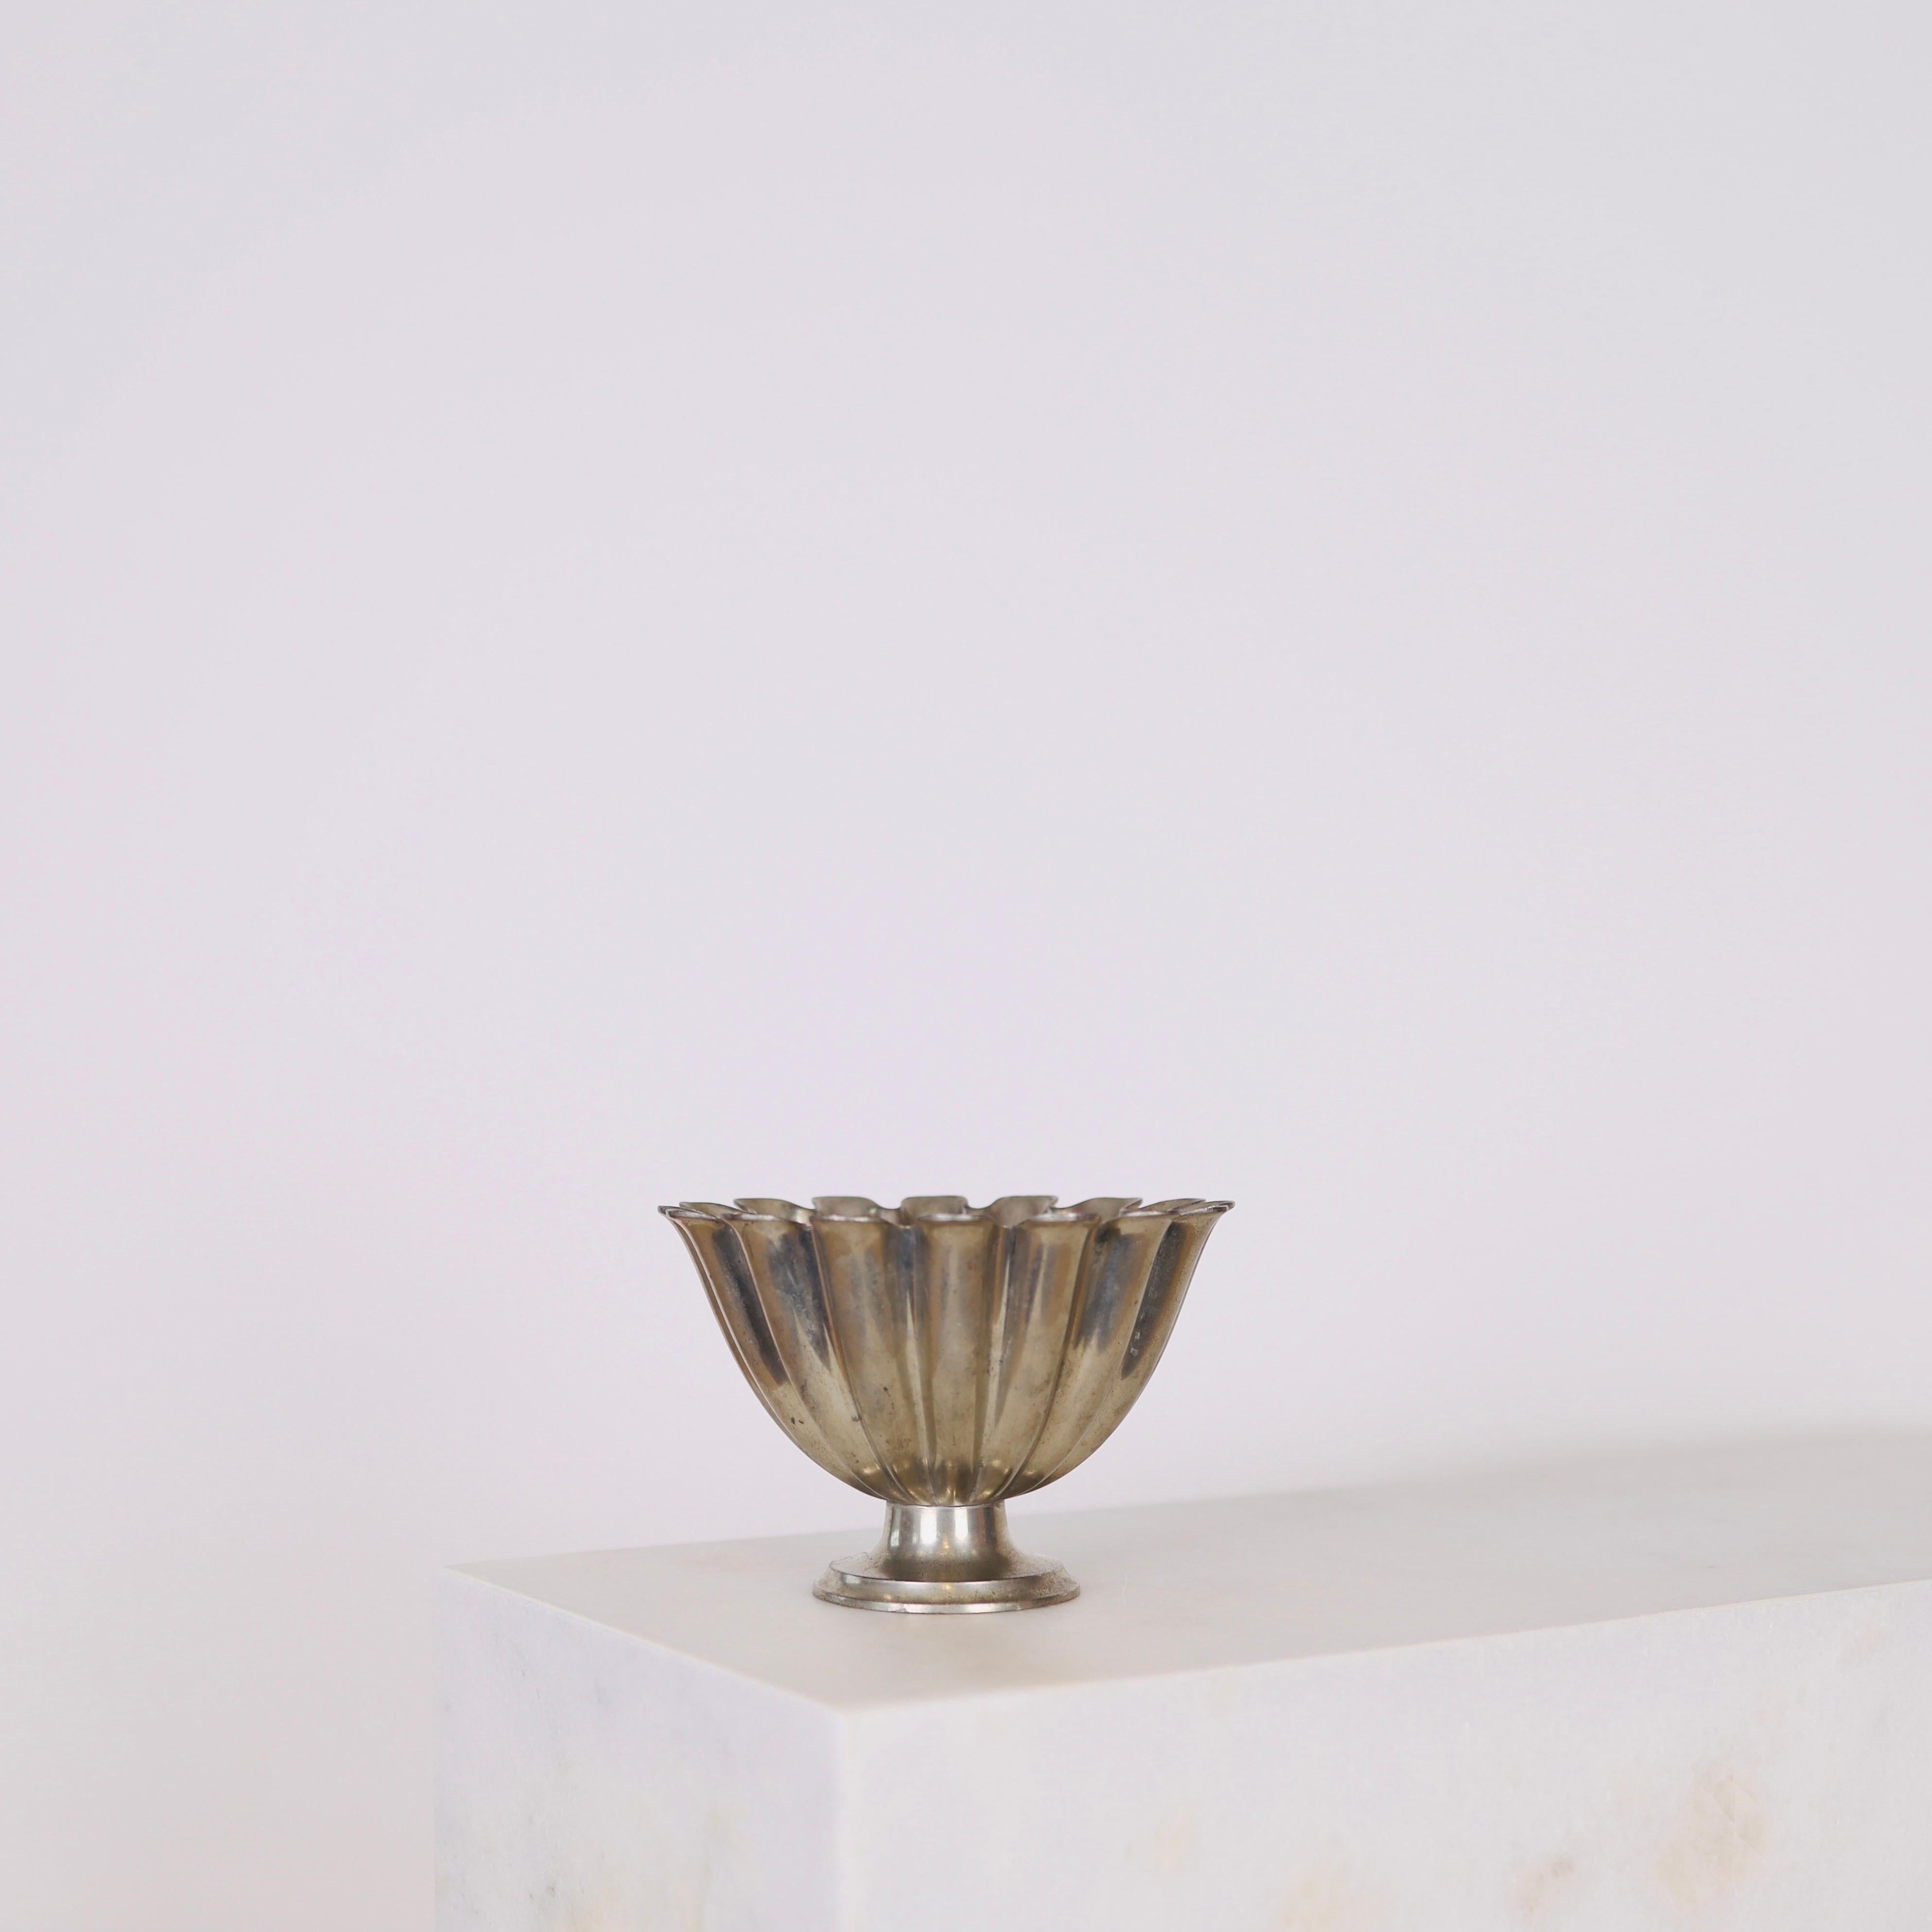 Danish Scalloped pedestal pewter bowl by Just Andersen 1920s, Denmark